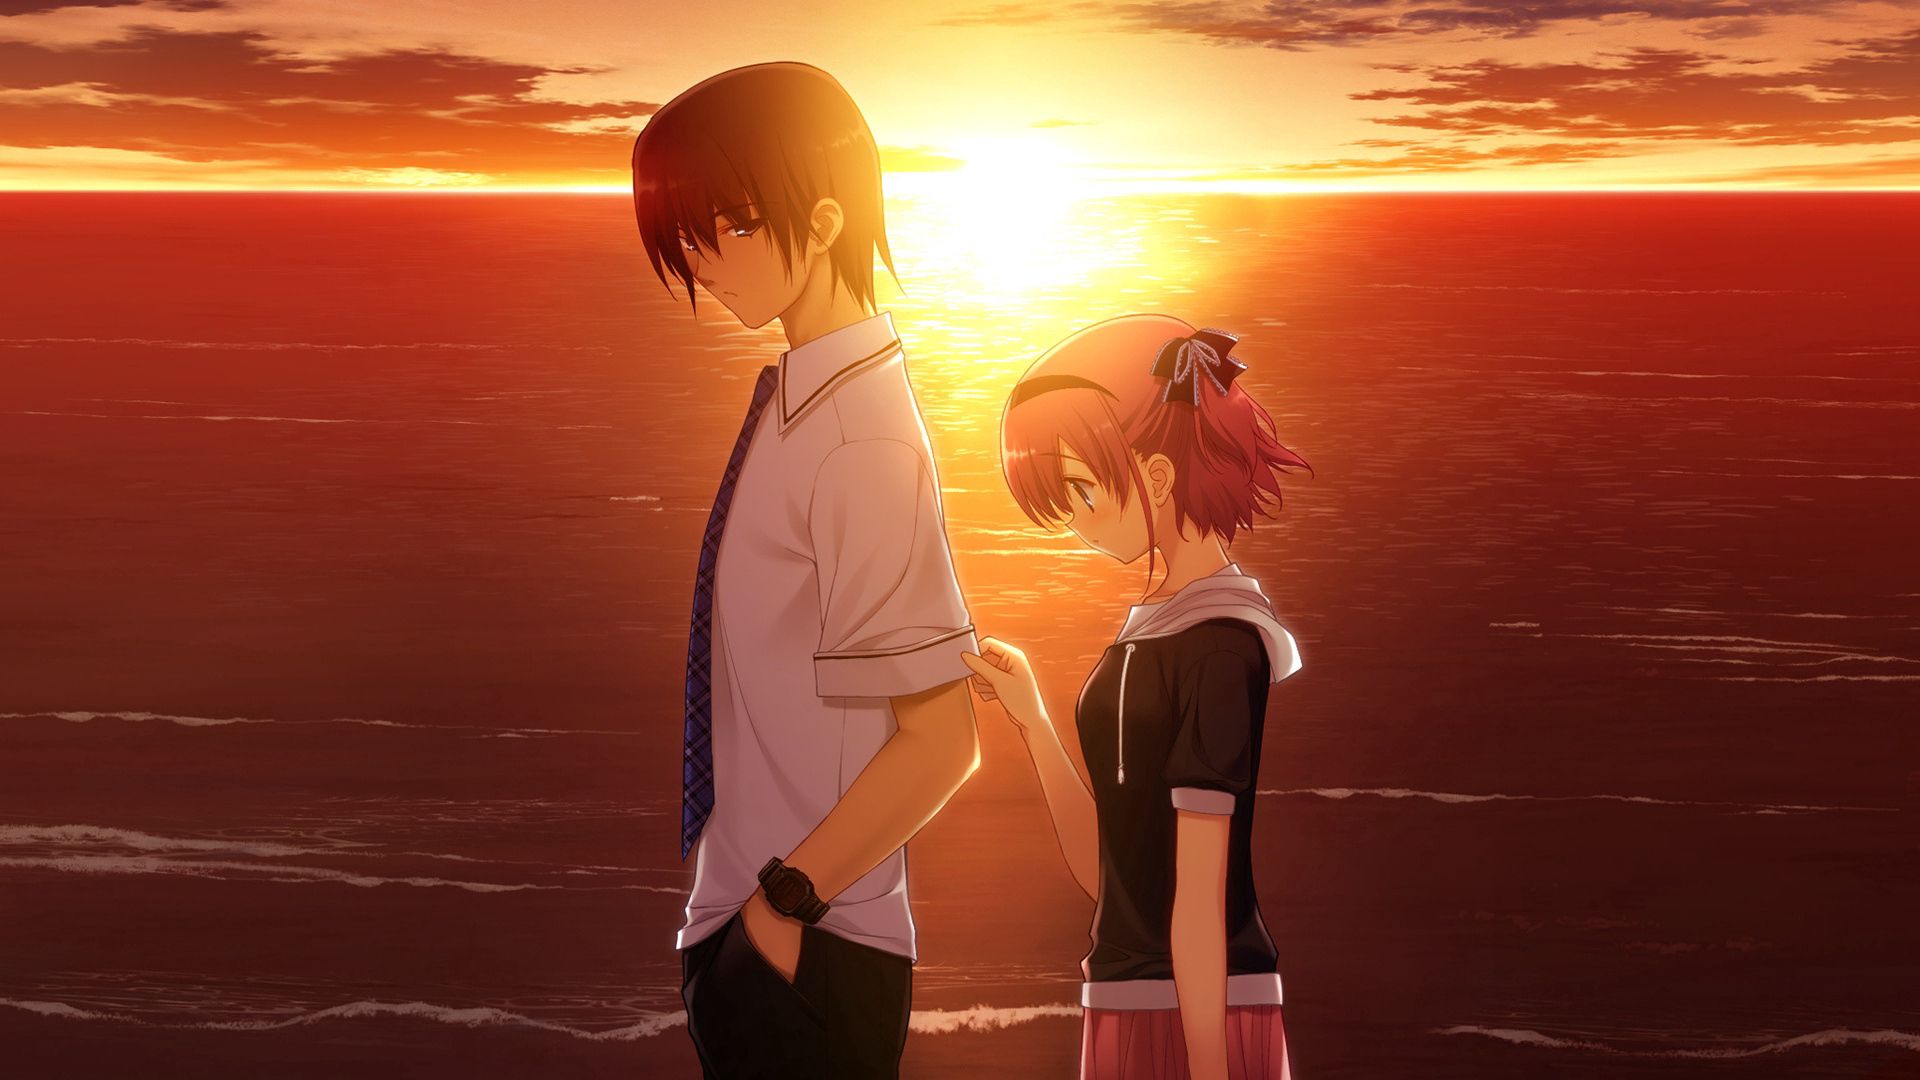 PC Wallpapers anime, girl, sunset, sadness, guy, sorrow